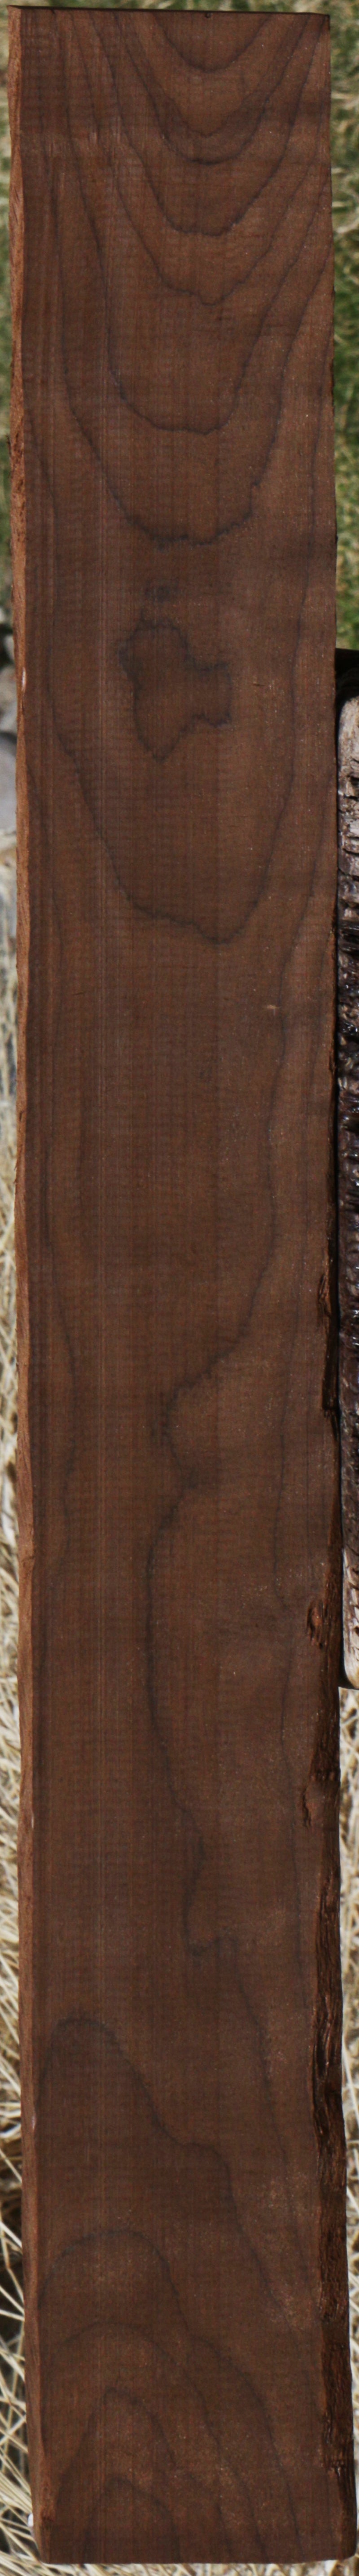 Extra Fancy Figured Caramelized Birch Lumber